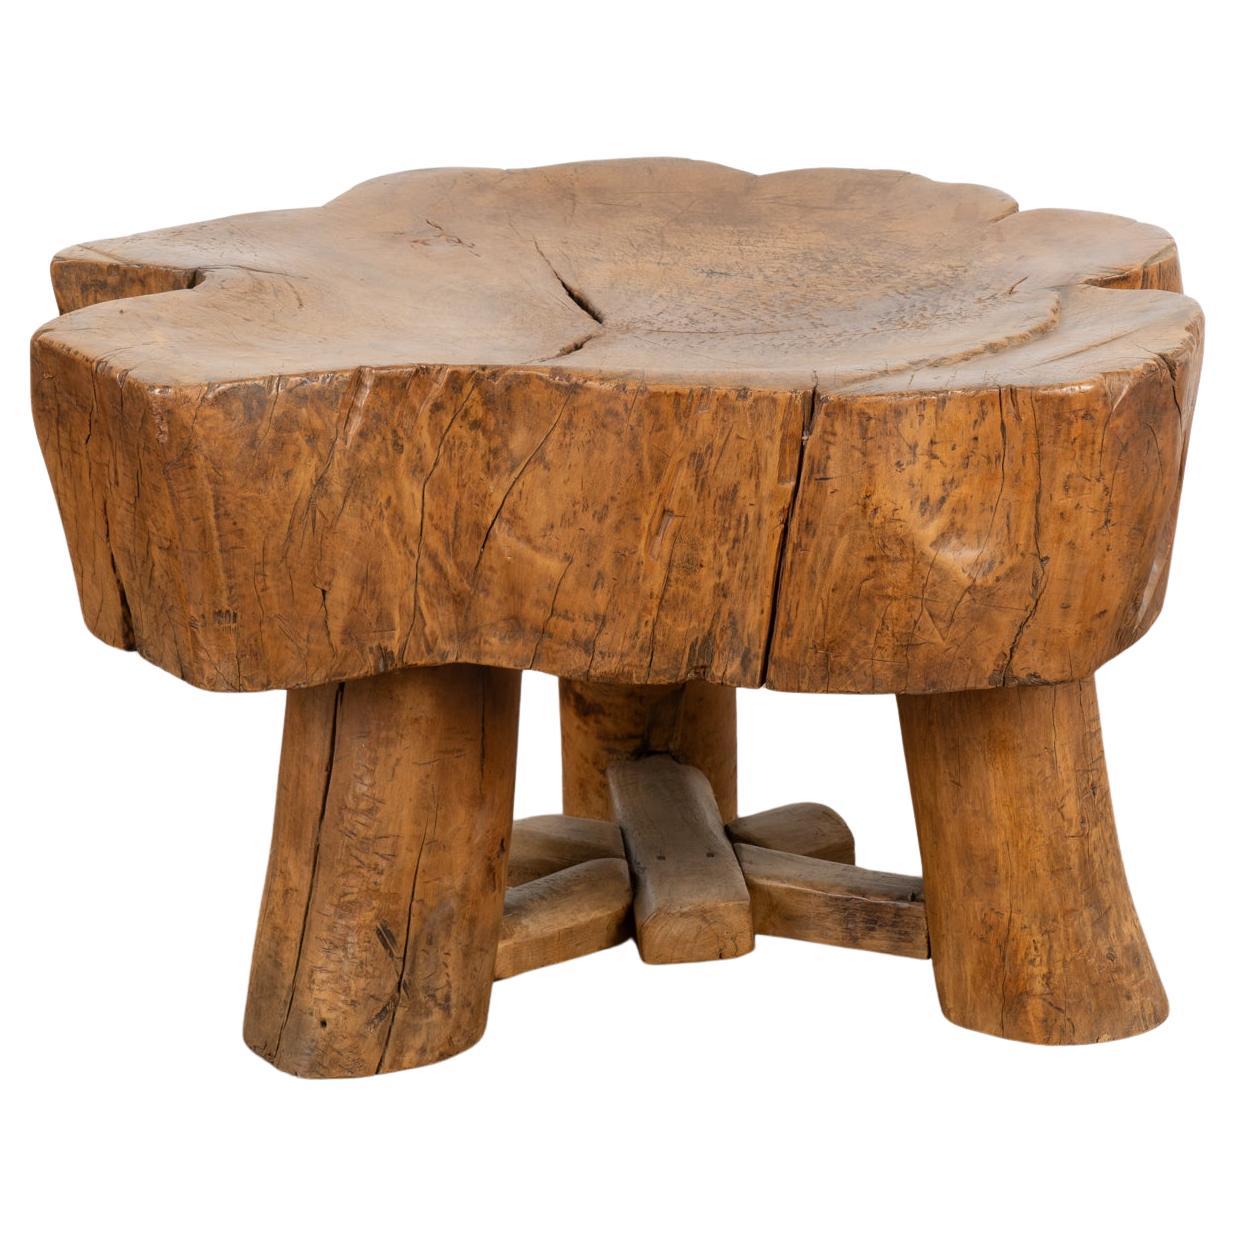 Table basse ronde en bois rustique, Chine vers 1890 en vente